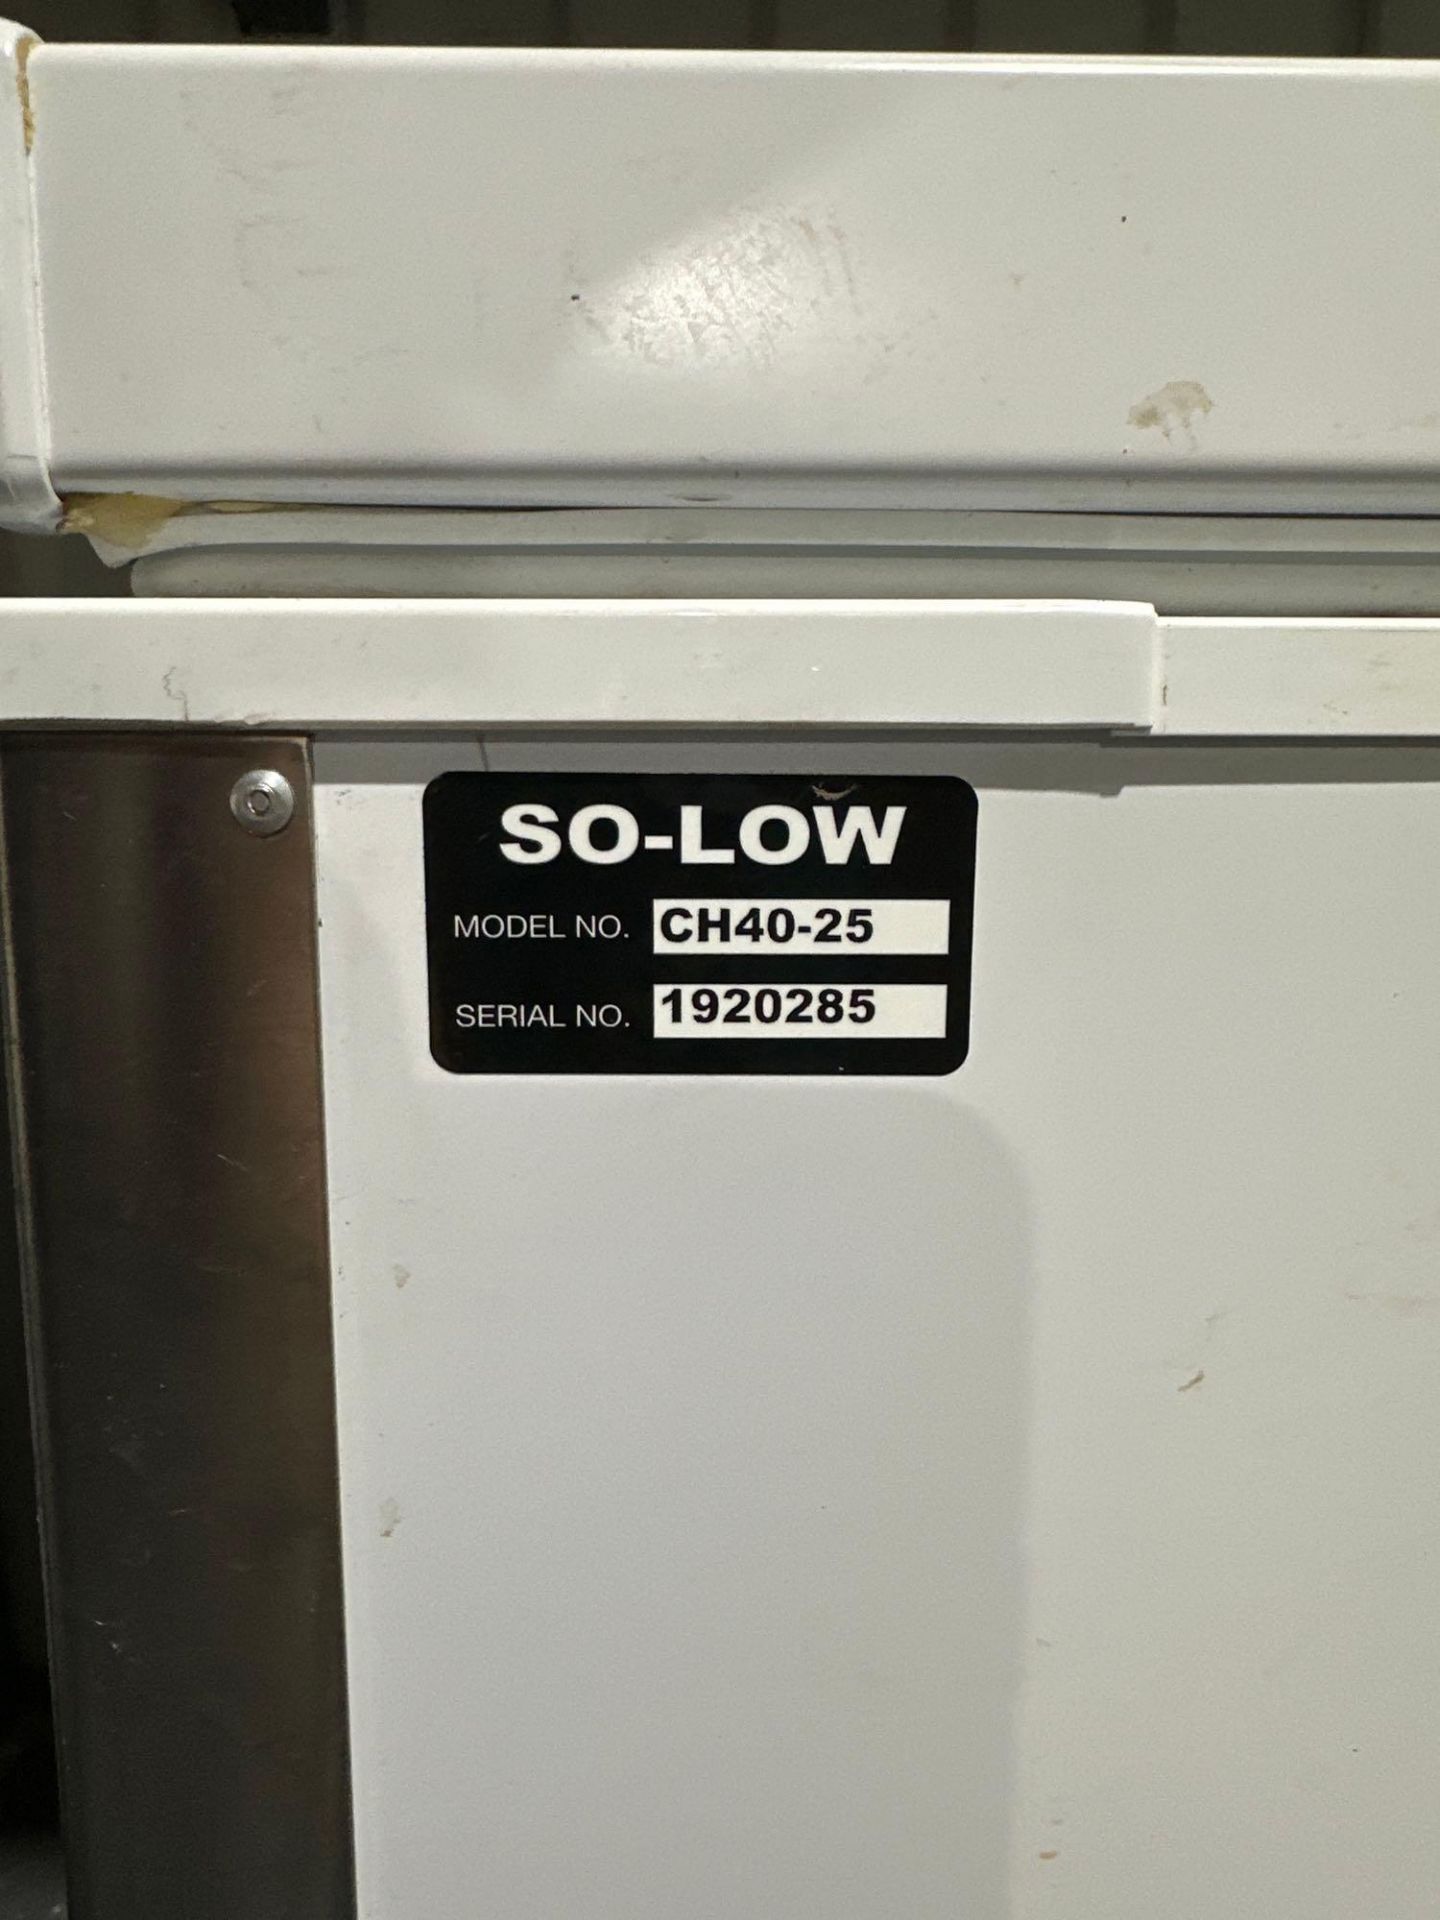 So-Low CH40-25 Deep Freezer - Image 2 of 4